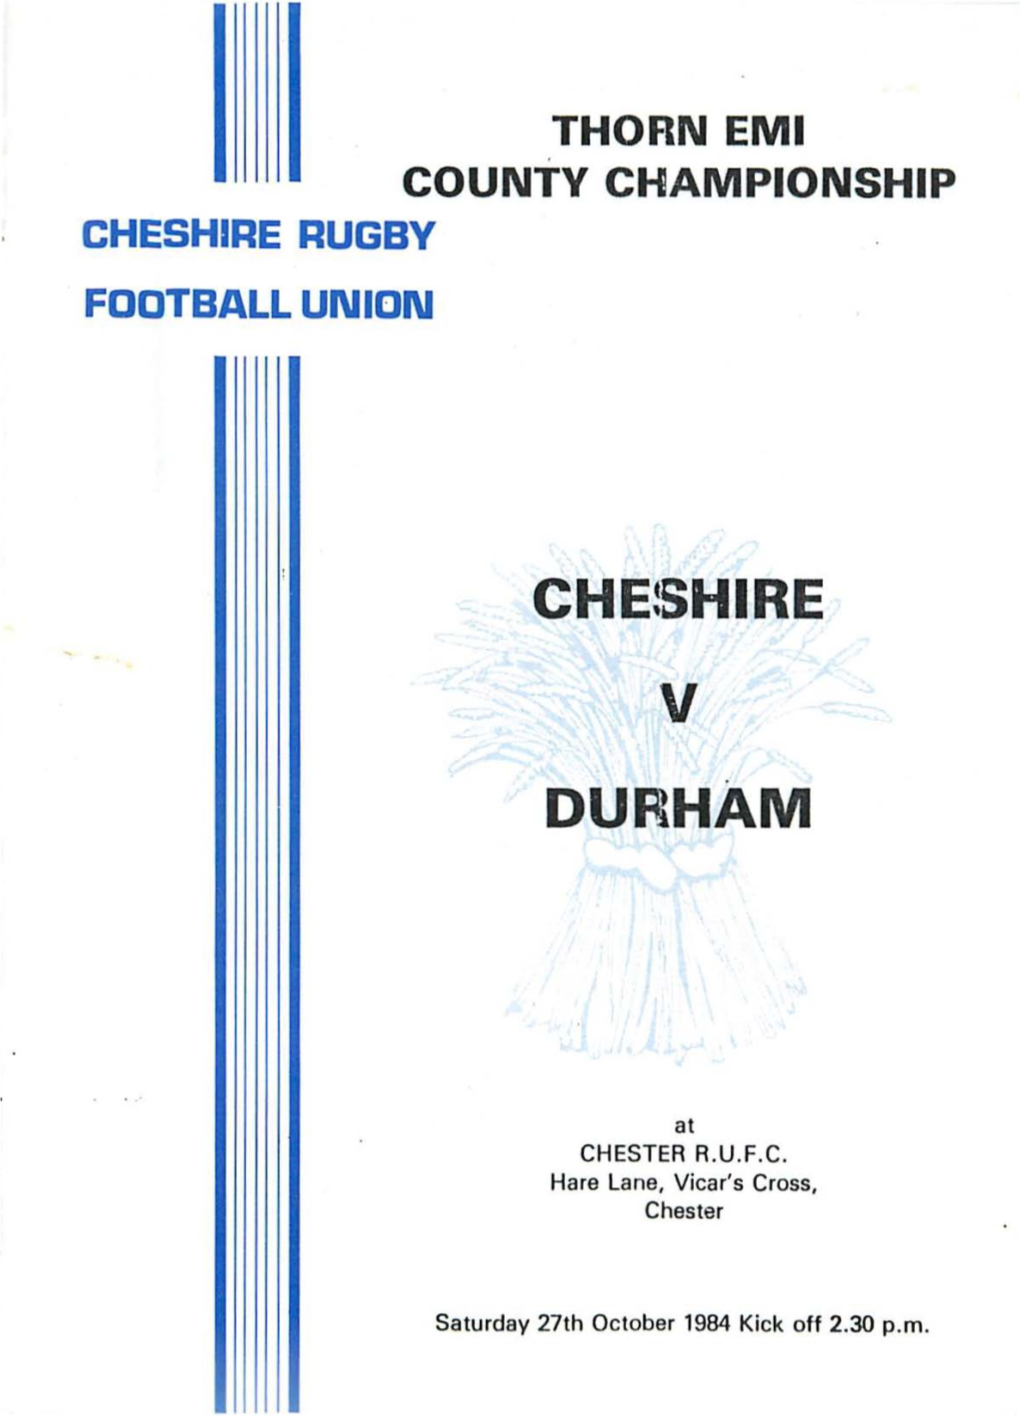 Cheshire V Durham